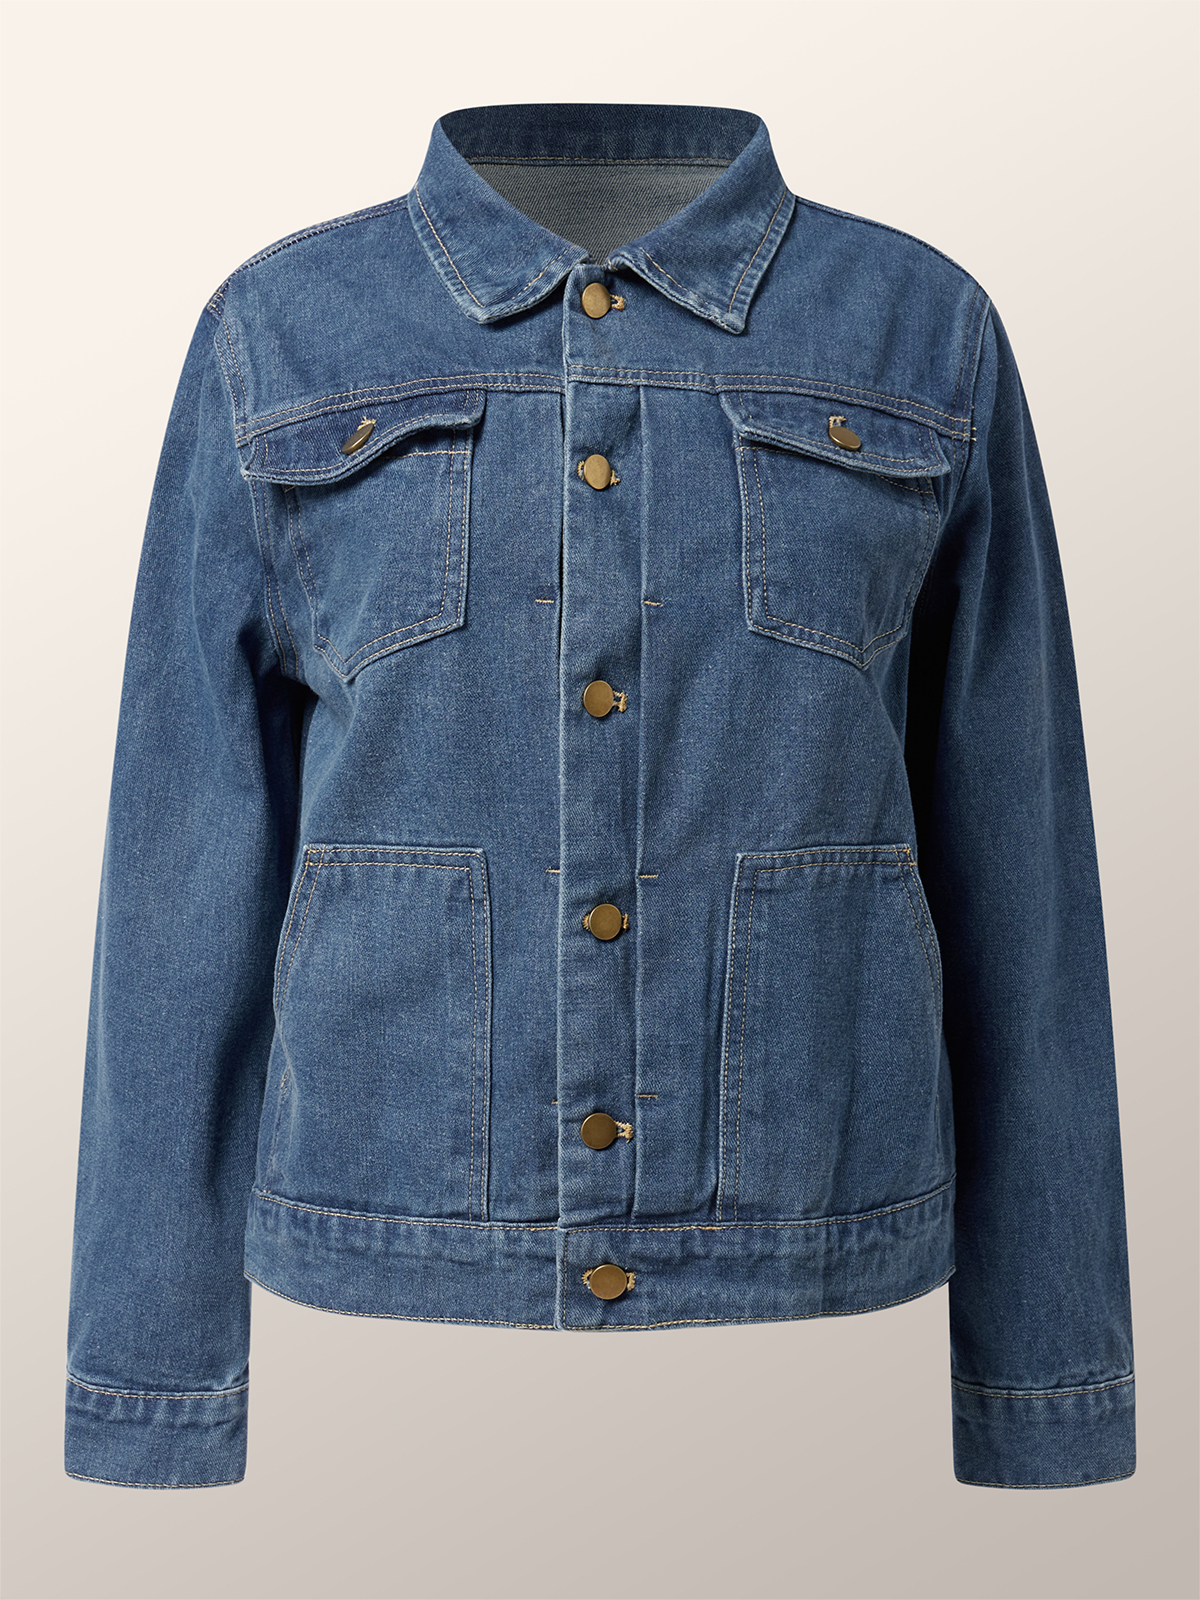 Urban Shirt Collar Pockets Long Sleeve  Denim Coat